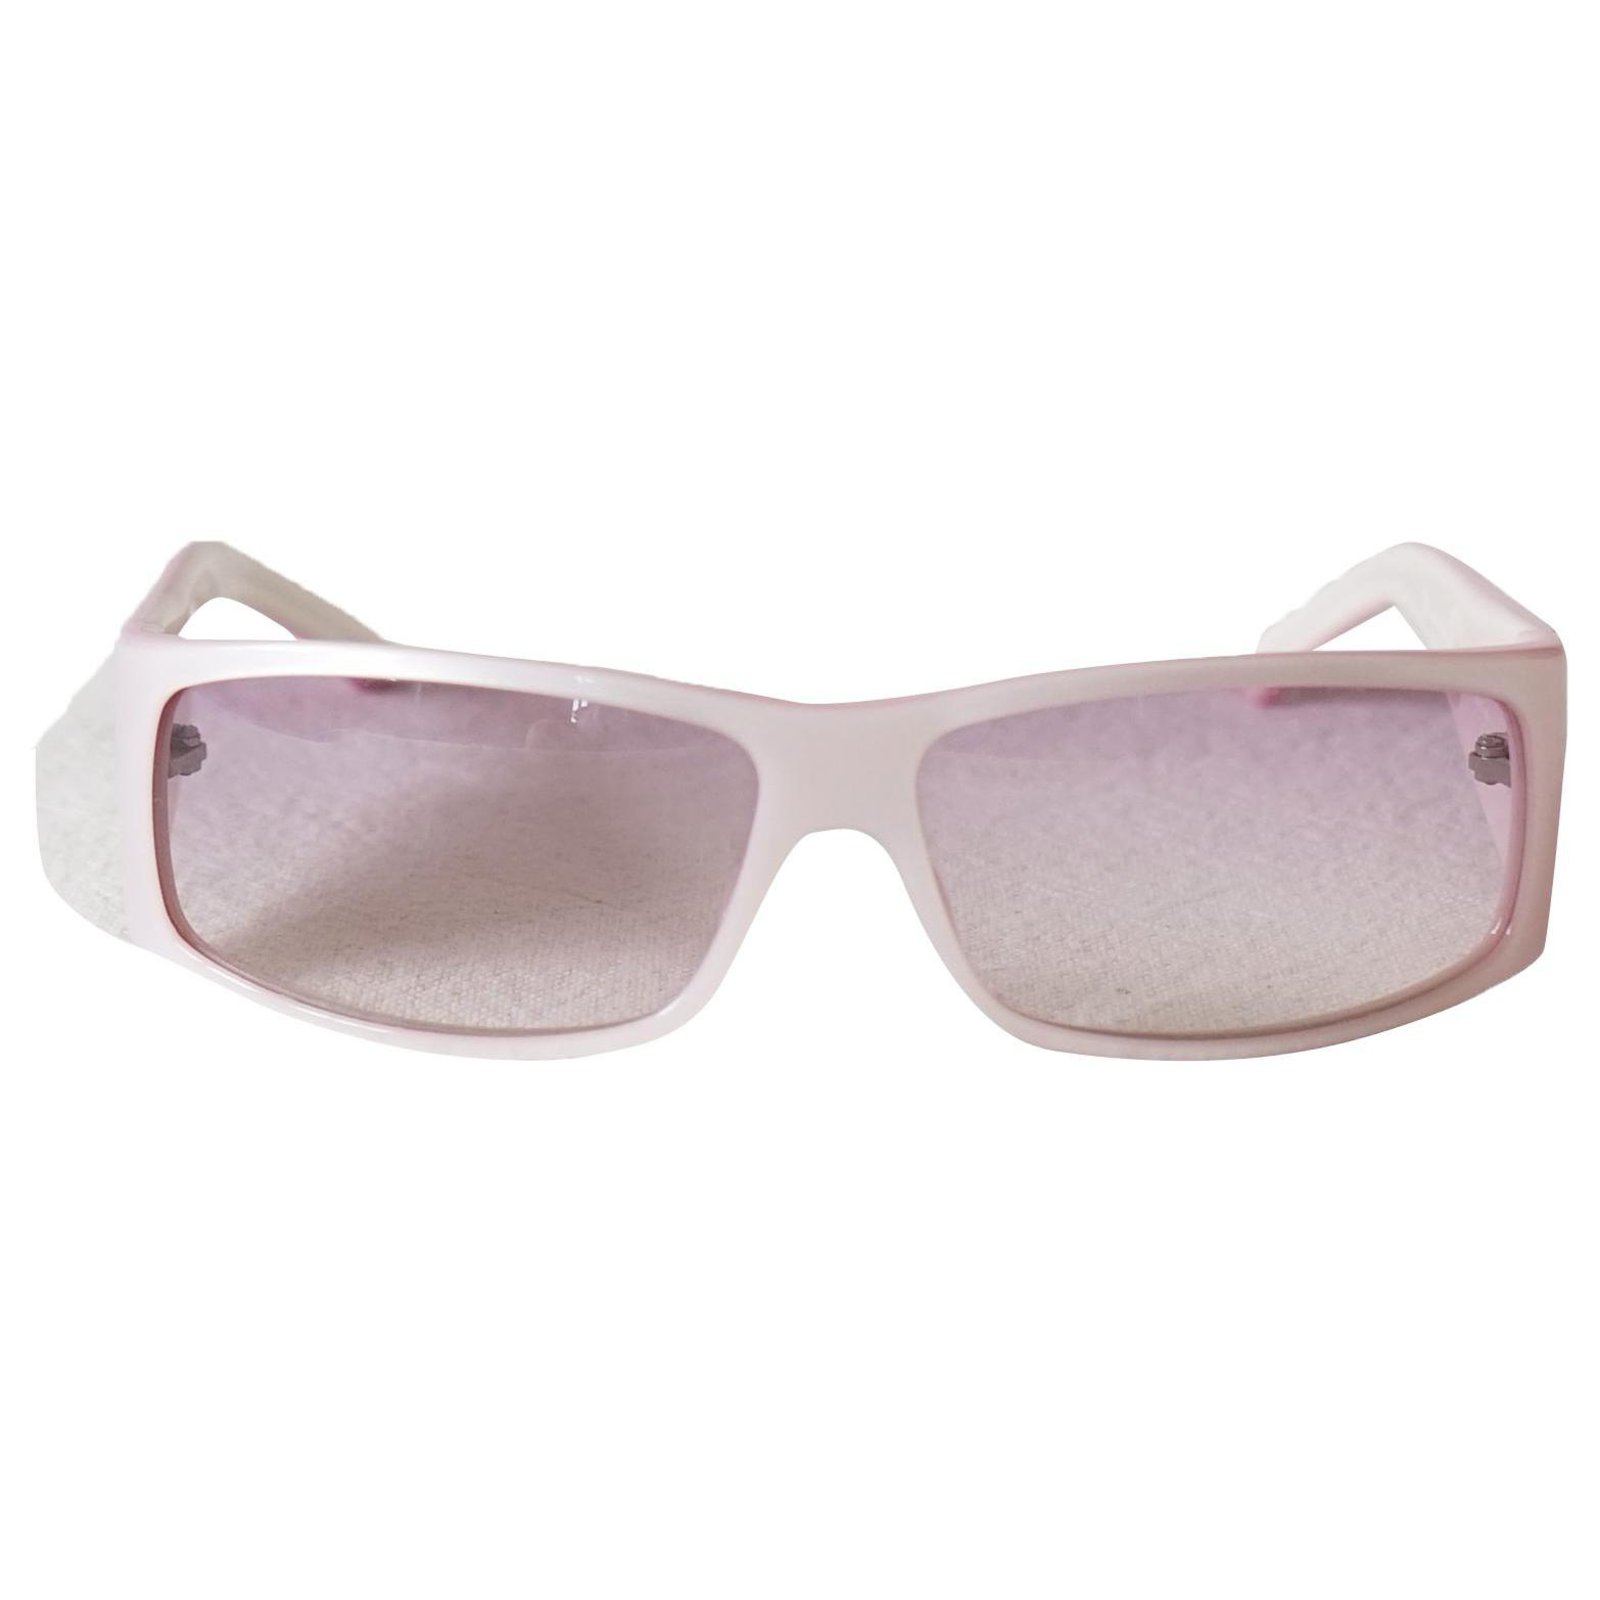 Sunglasses Off-White Pink in Plastic - 33033235